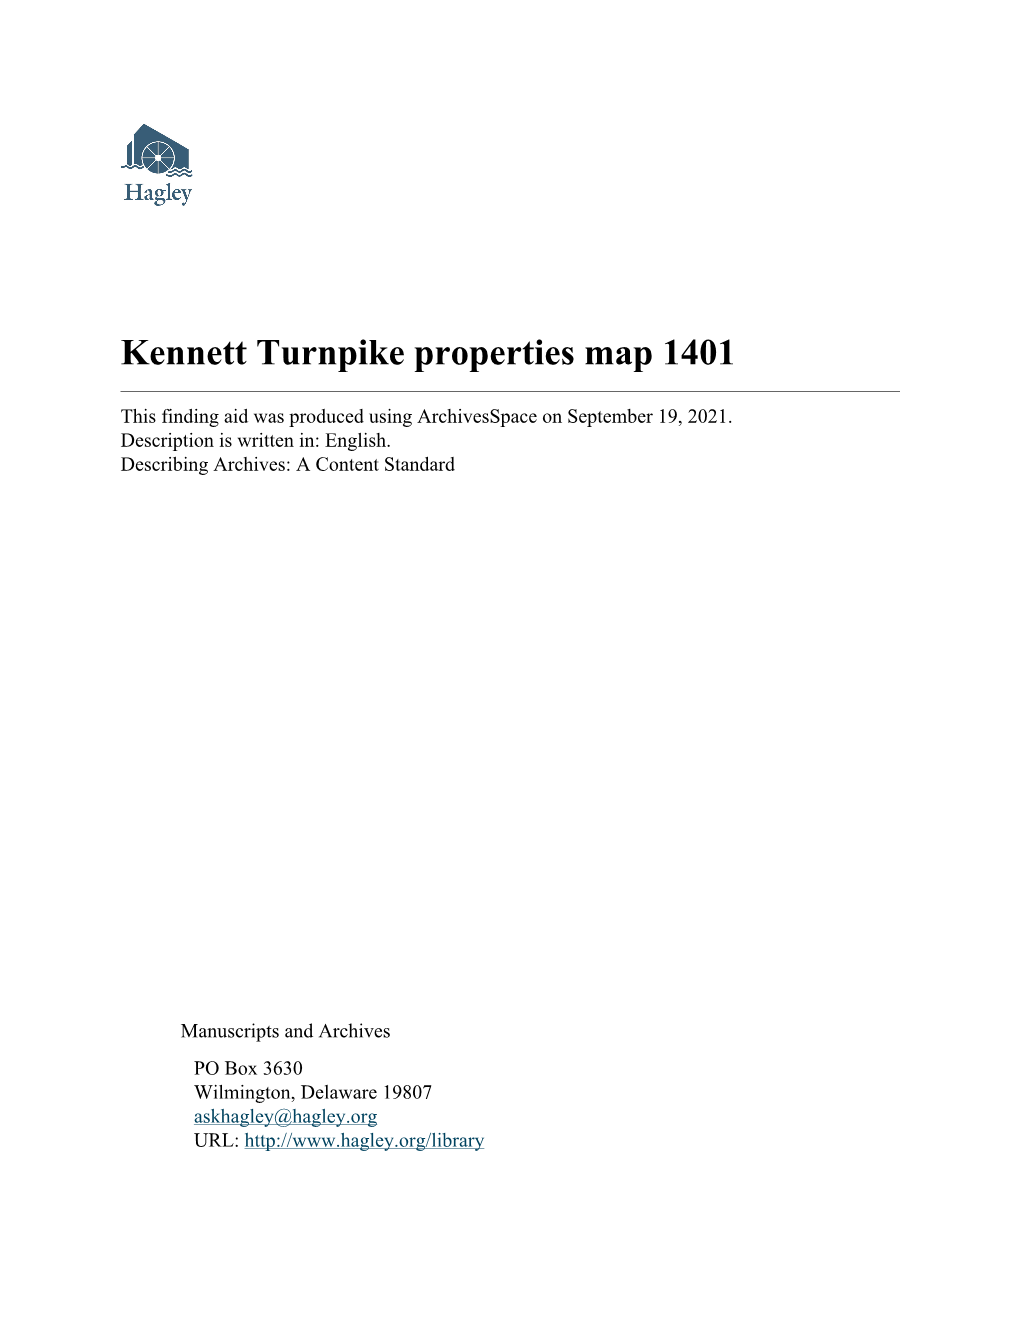 Kennett Turnpike Properties Map 1401